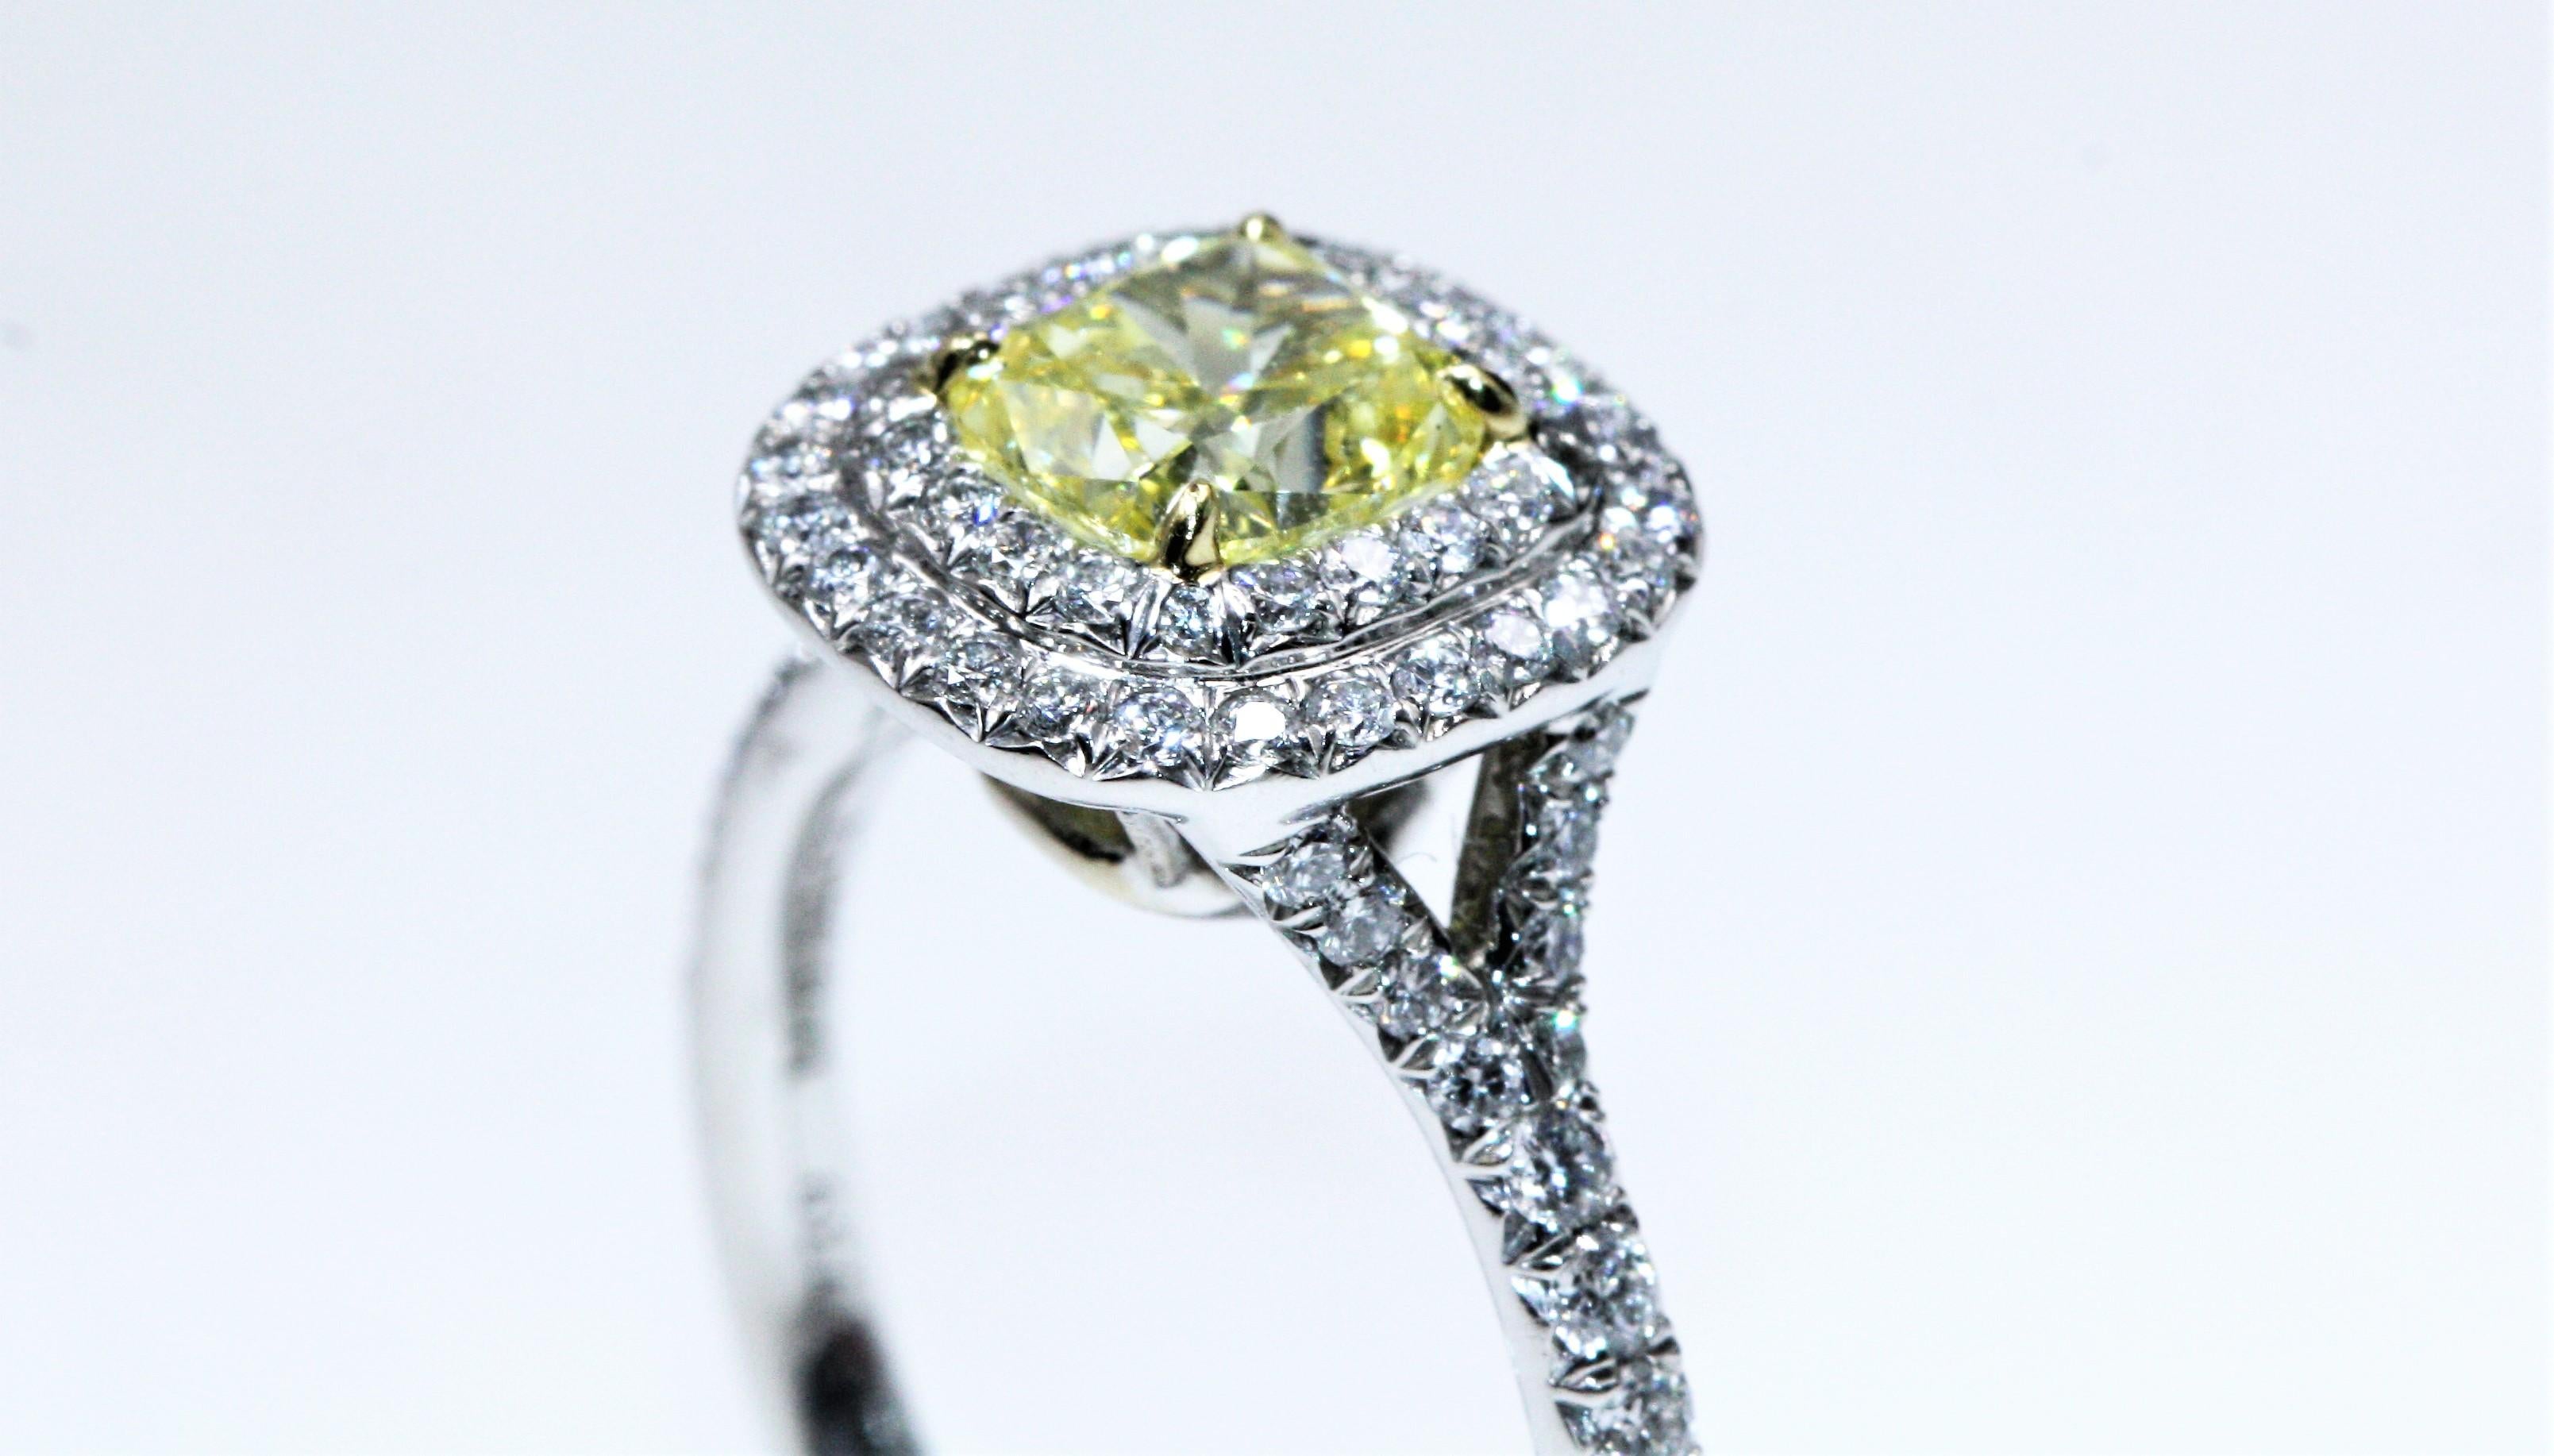 Tiffany & Co. Square Fancy Intense Yellow Diamond Ring 0.92 Carat, VS2 For Sale 2